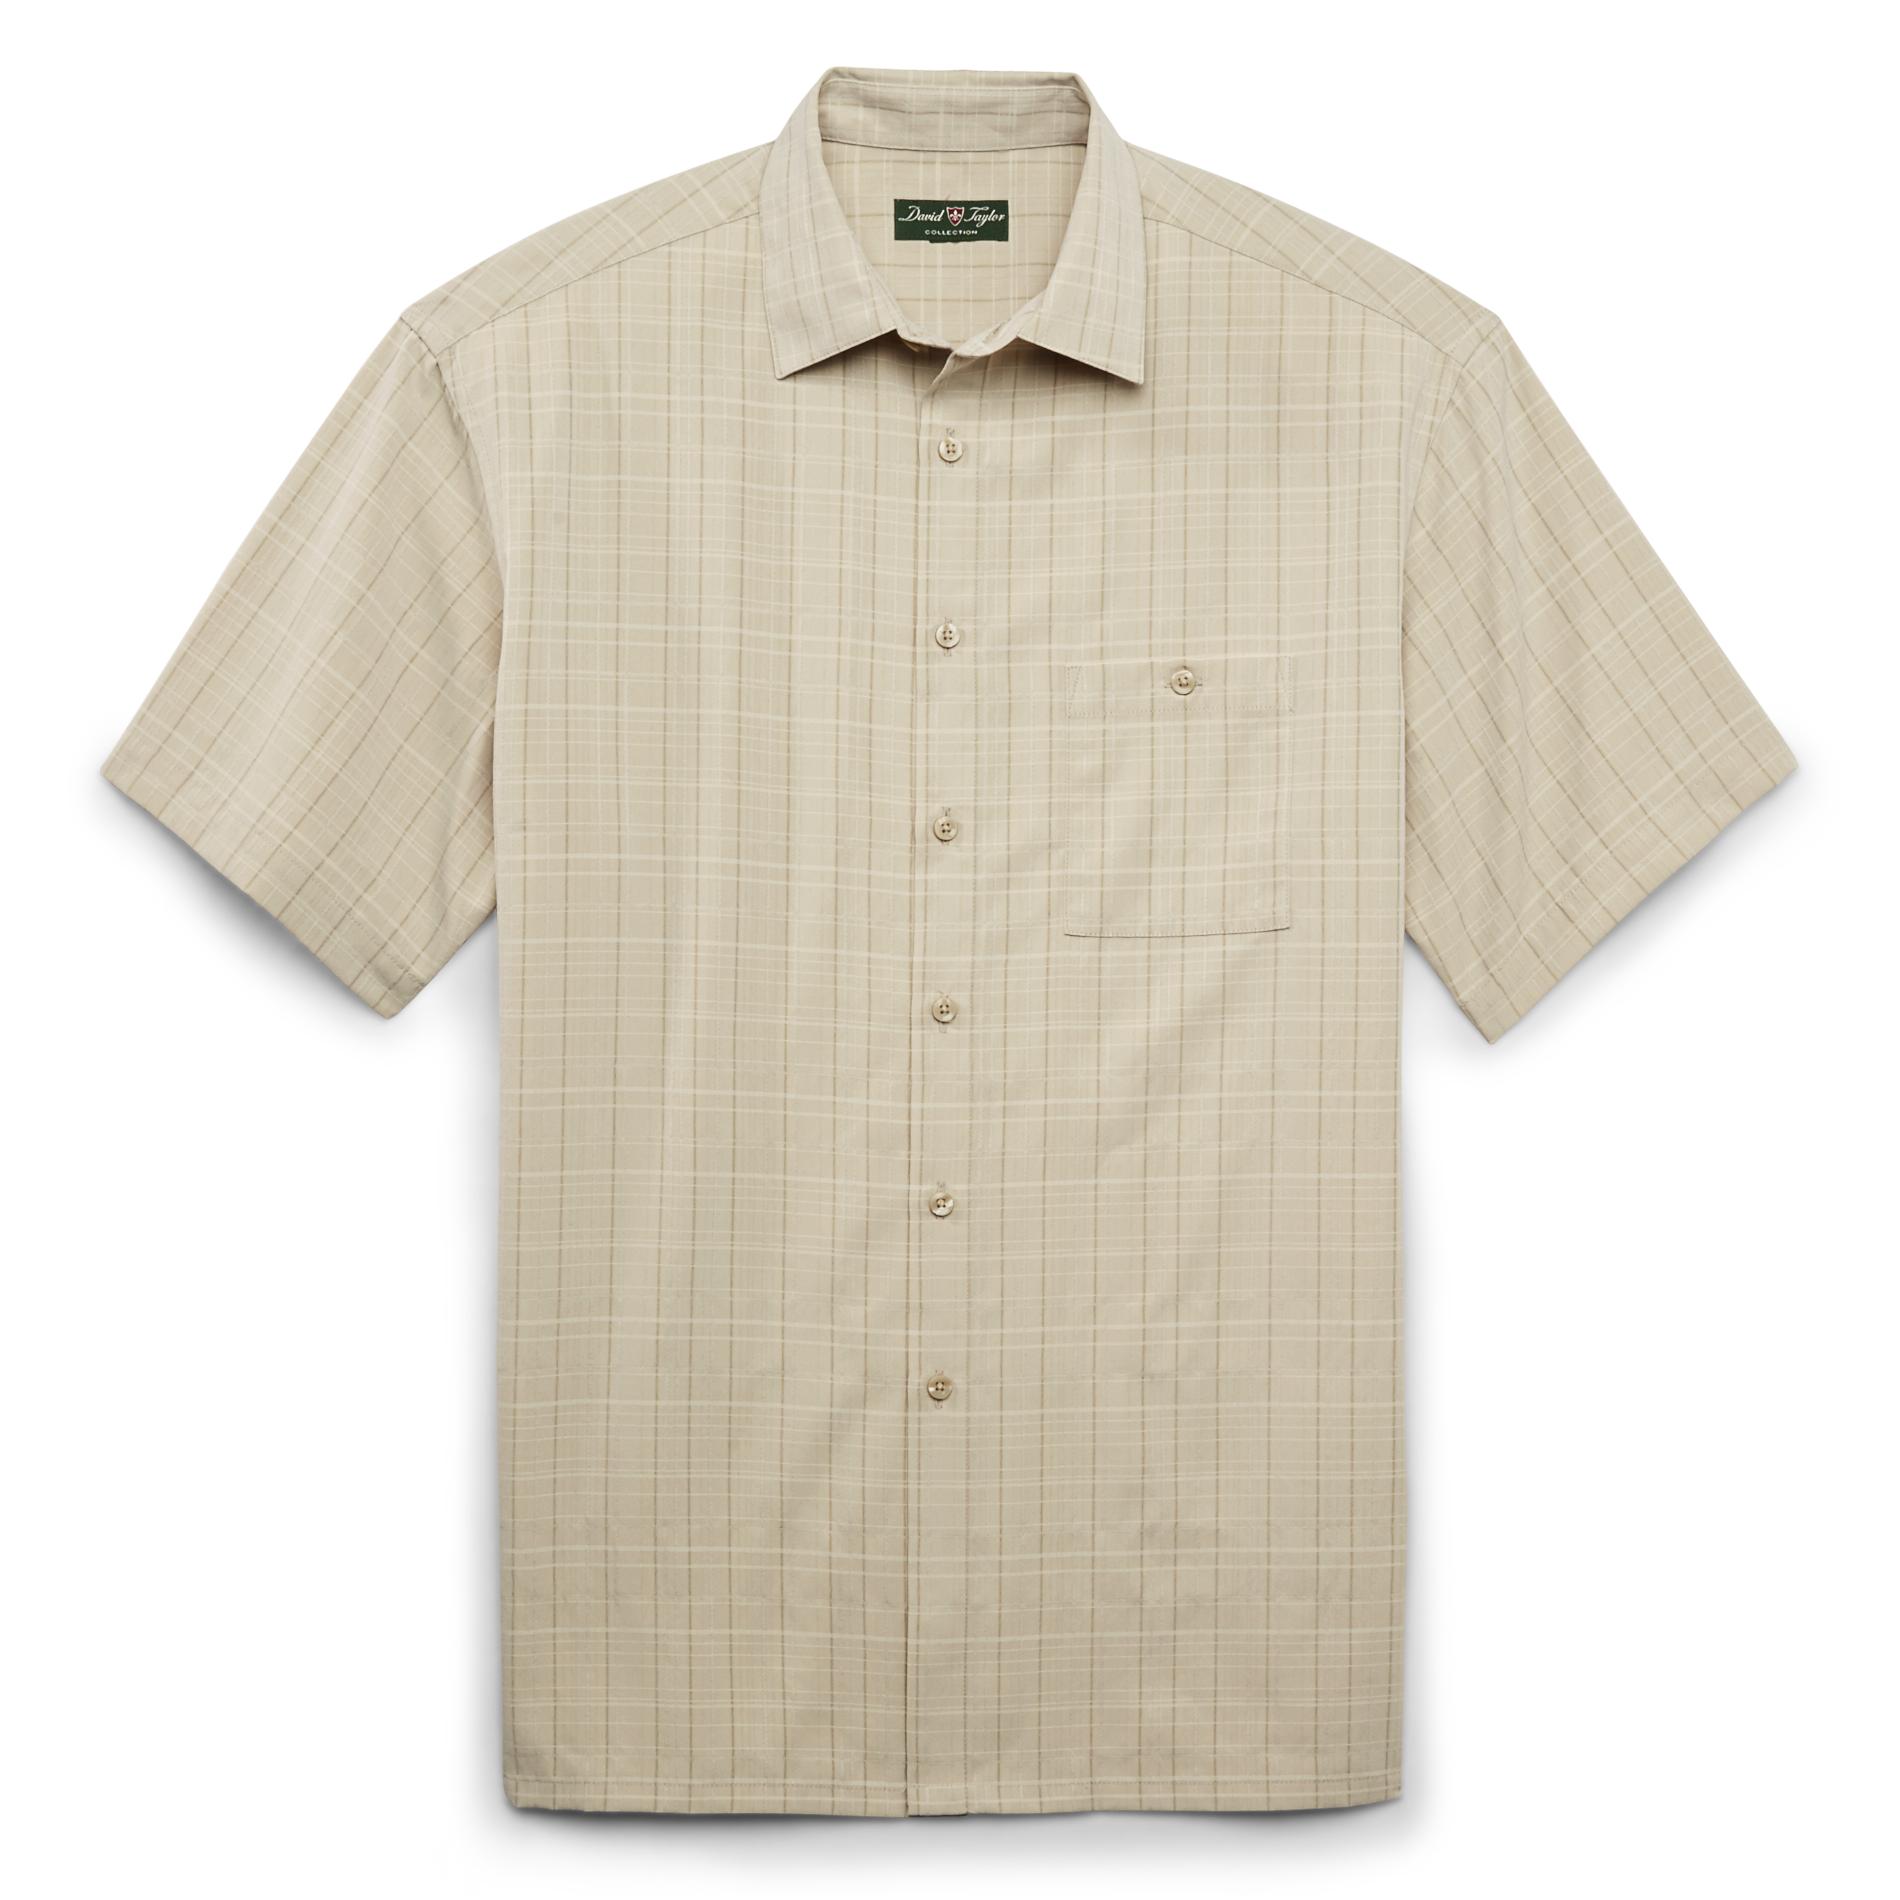 David Taylor Collection Men's Short-Sleeve Button-Front Shirt - Tonal Plaid